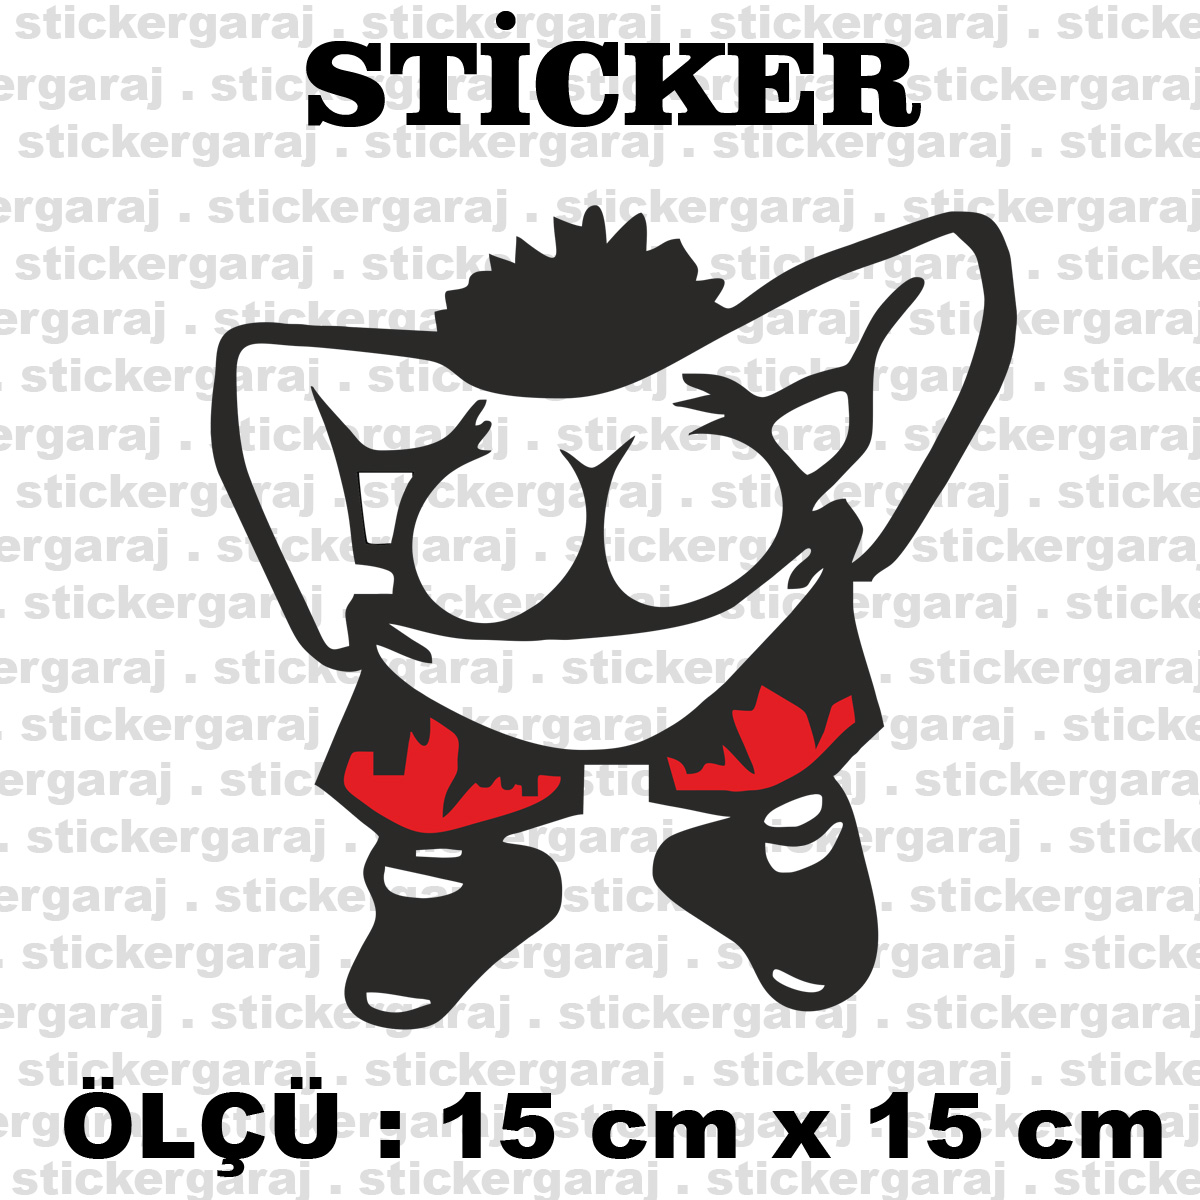 popo.cdr 15 15 - Popo kıç komik sticker